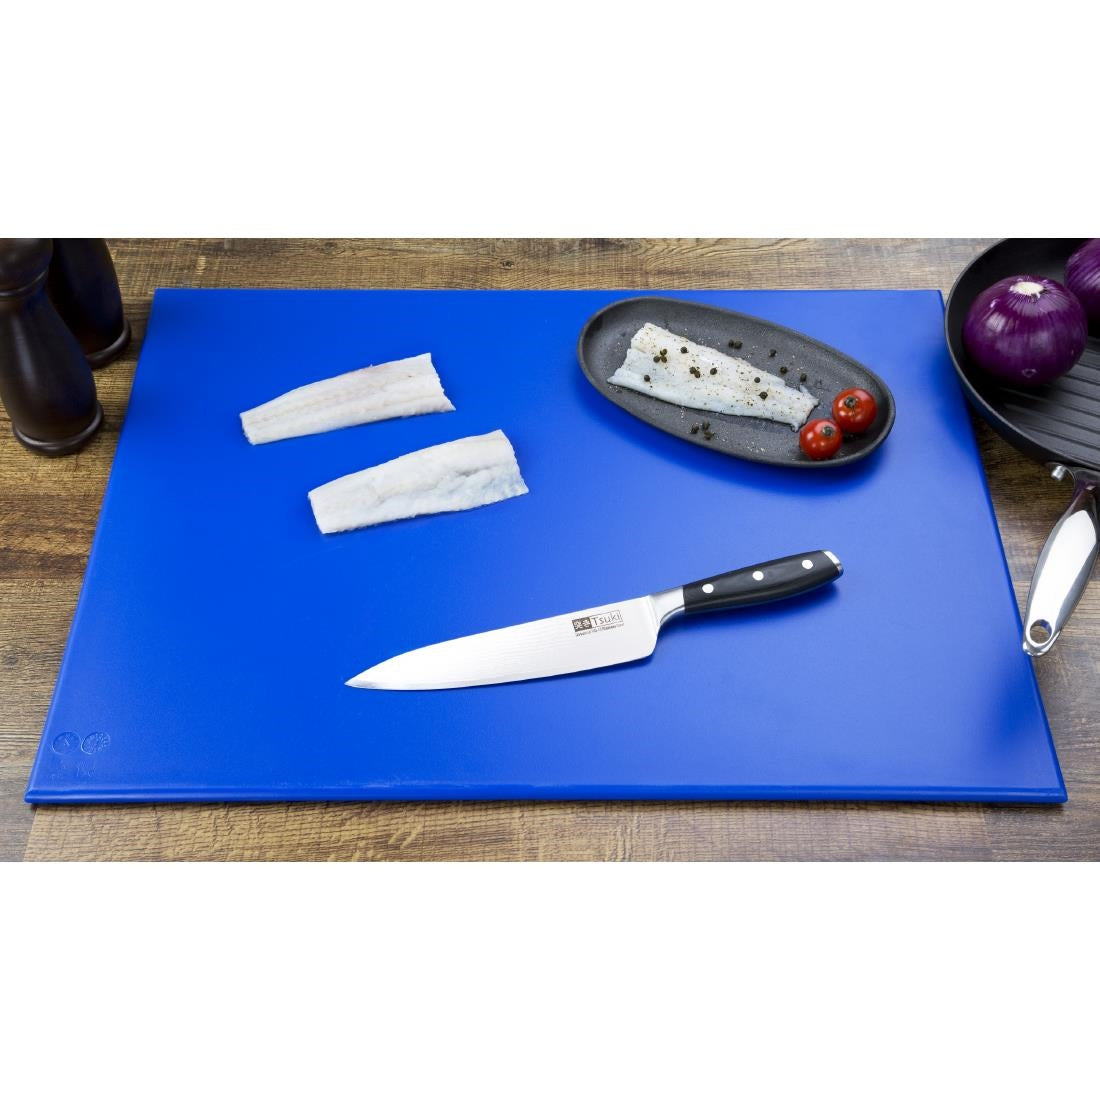 Hygiplas High Density Blue Chopping Board Large JD Catering Equipment Solutions Ltd